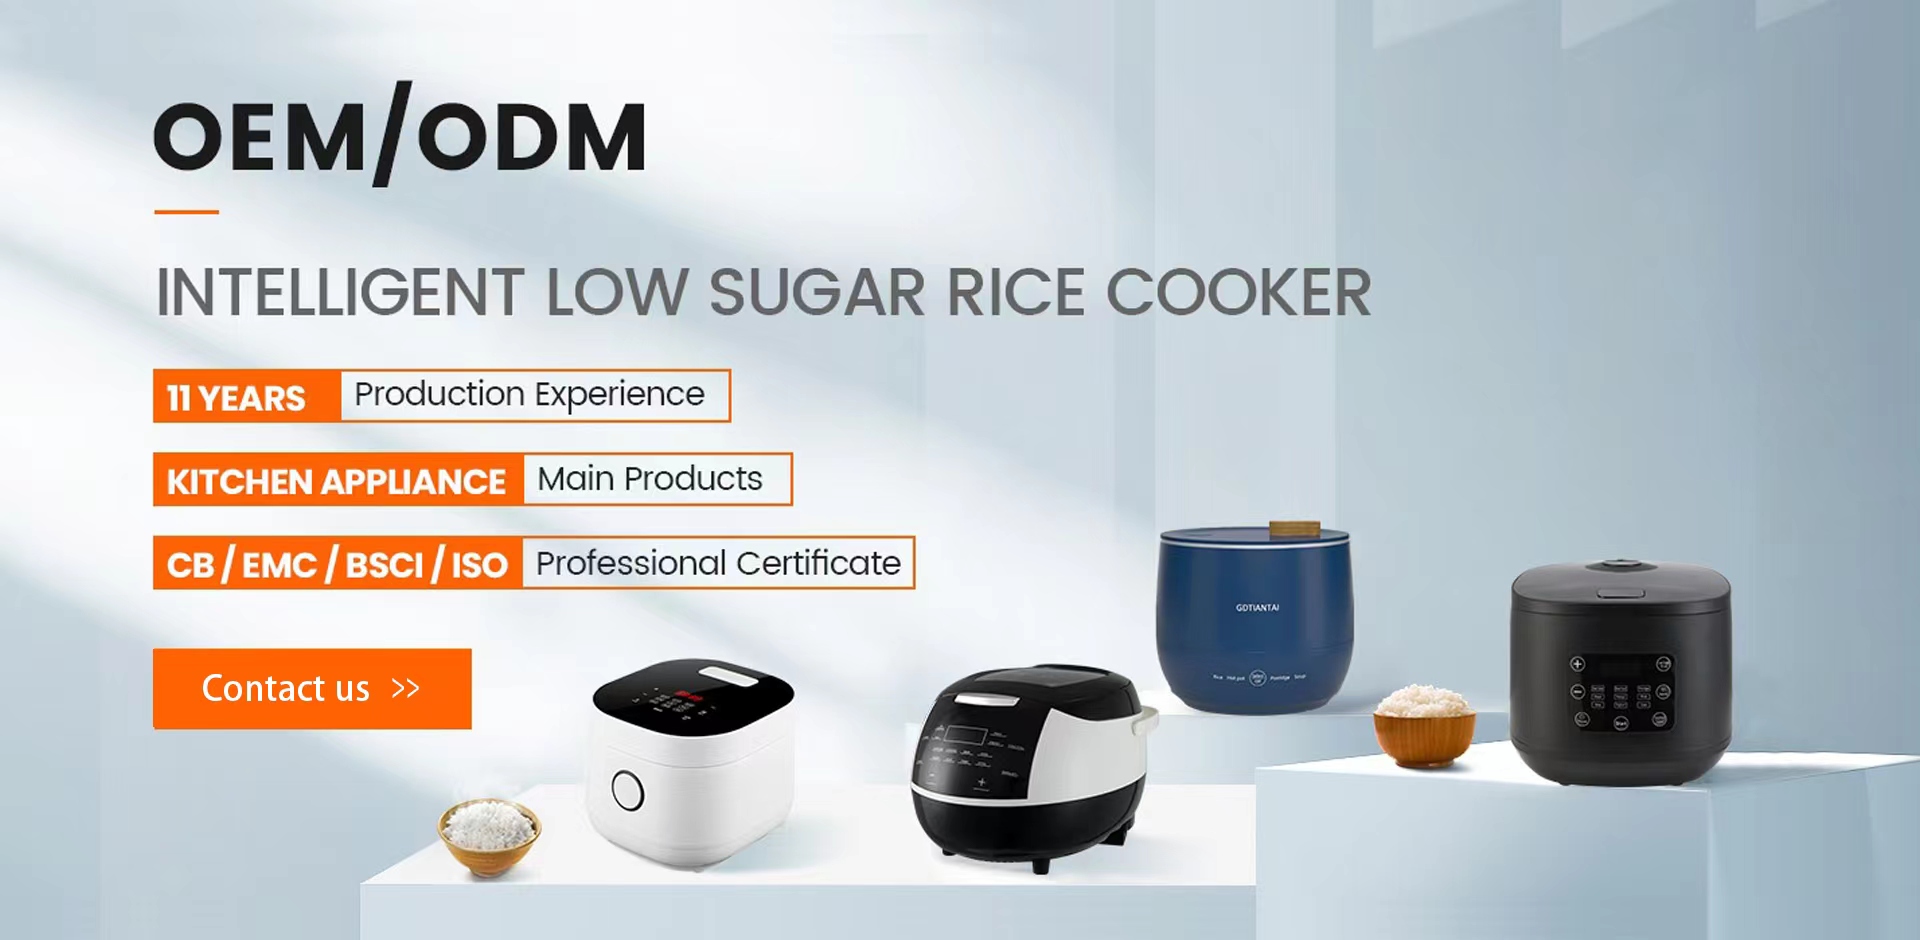 Rice Cooker Manufacturer, Elecrtic Cooker Manufacturer - Tiantai